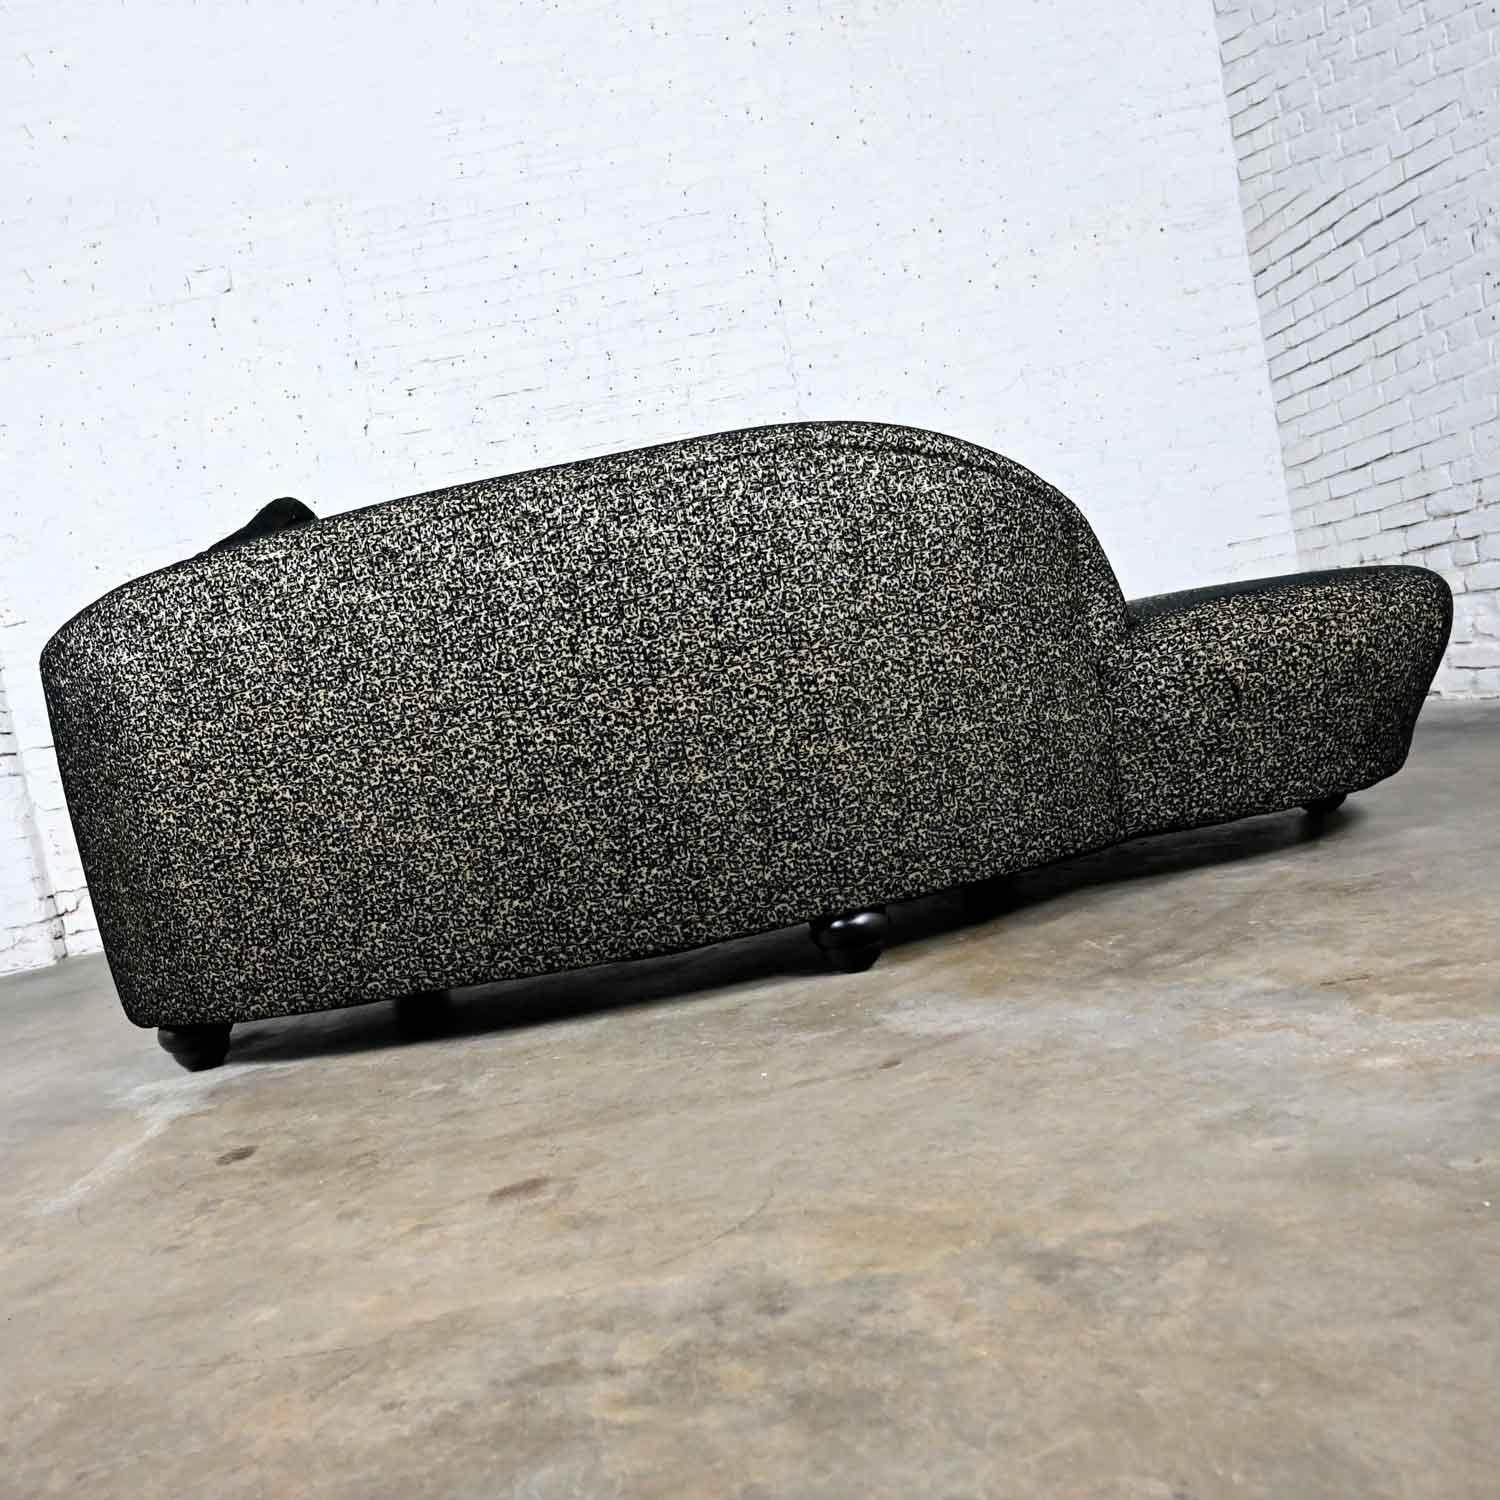 Postmodern Black & Khaki Sort of Animal Print Serpentine Cloud-Like Chaise Sofa For Sale 9